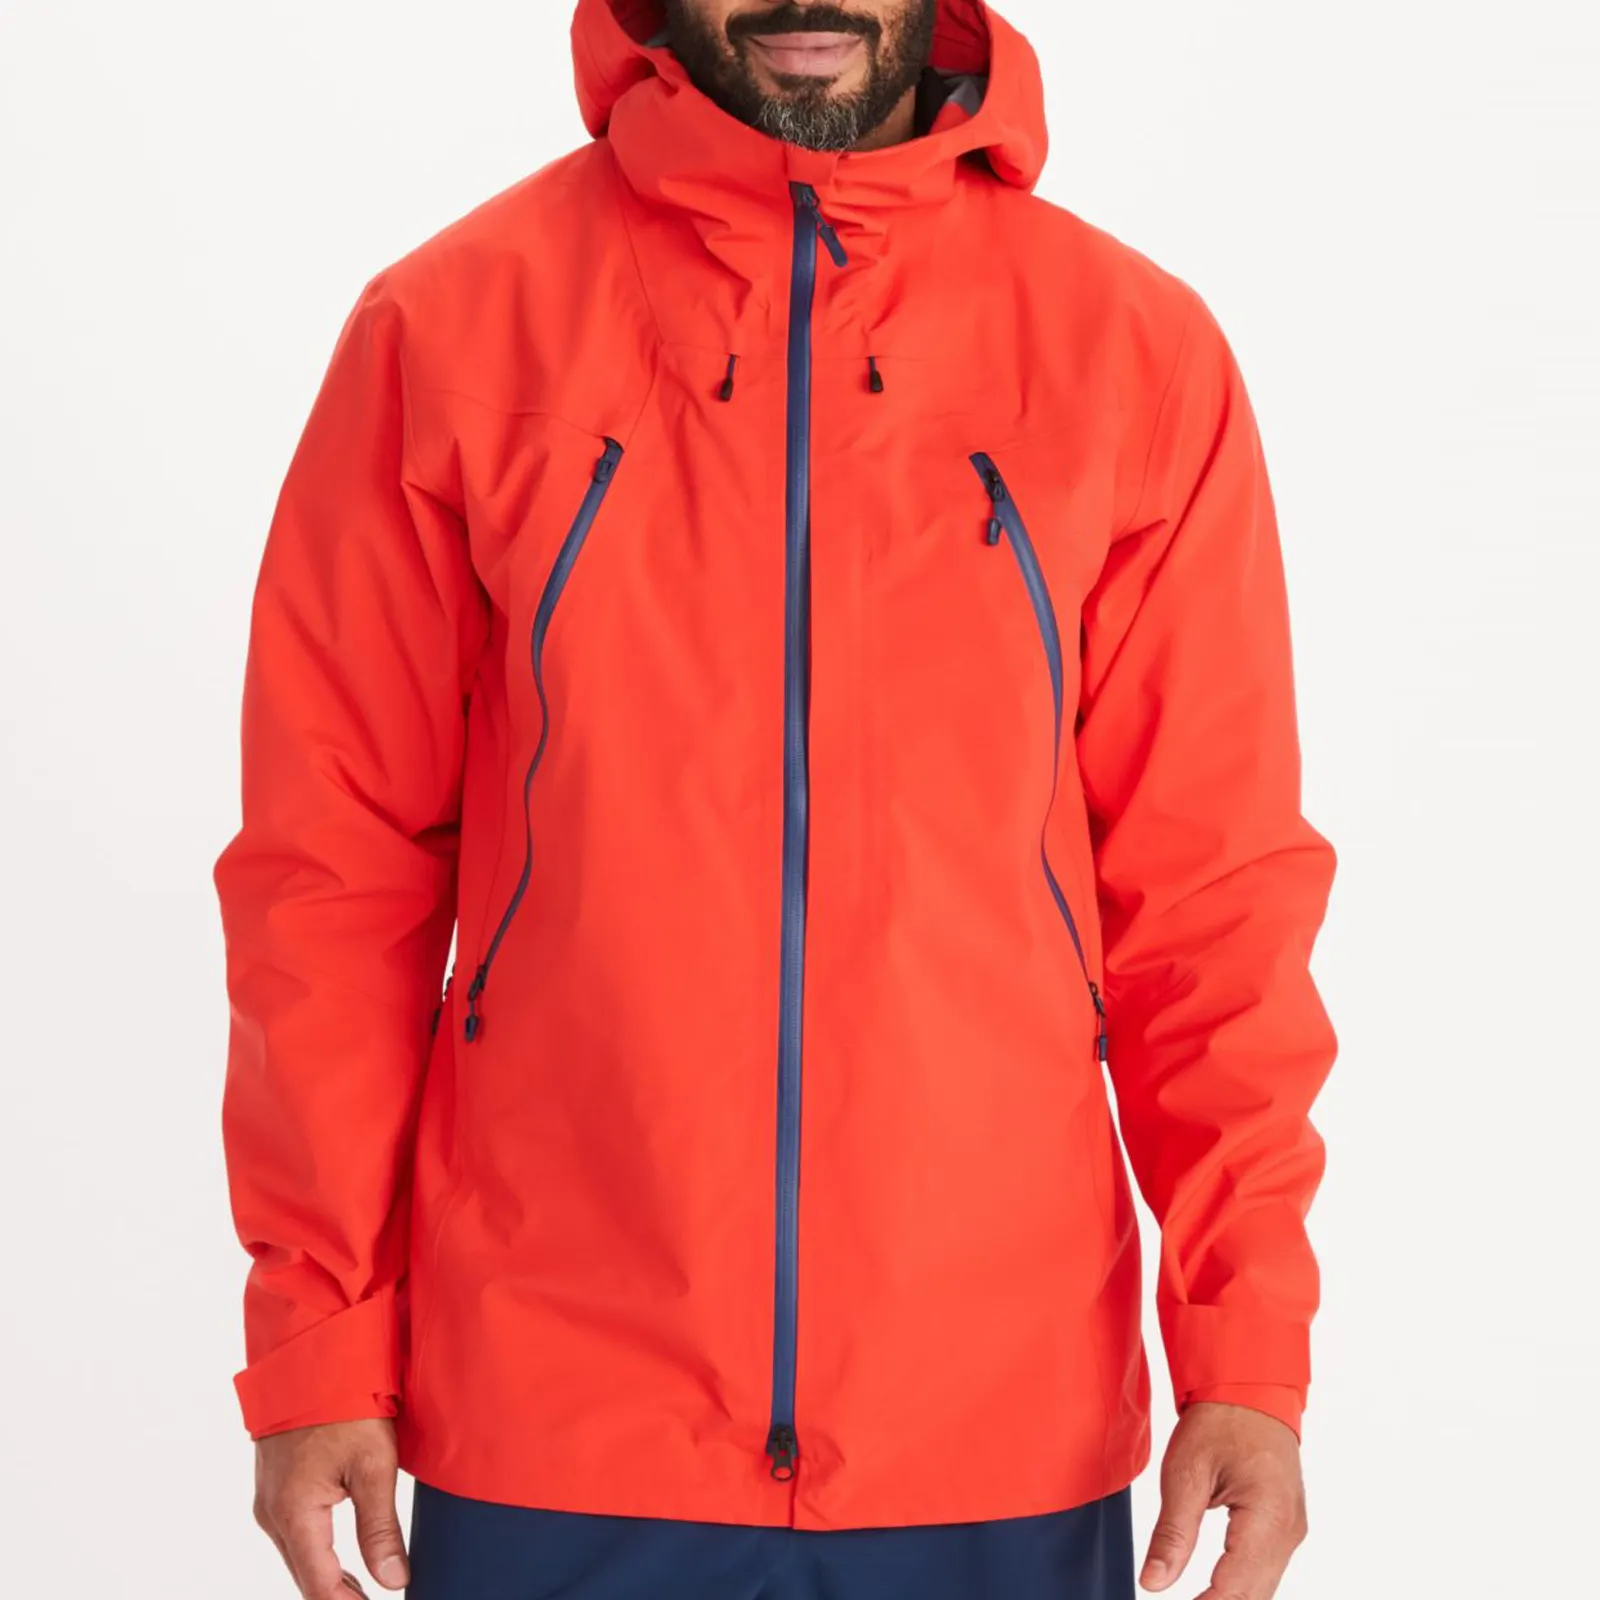 Custom Quality Windbreaker Waterproof Jacket Soft Shell Hooded Hiking Camping with Functional Zipper